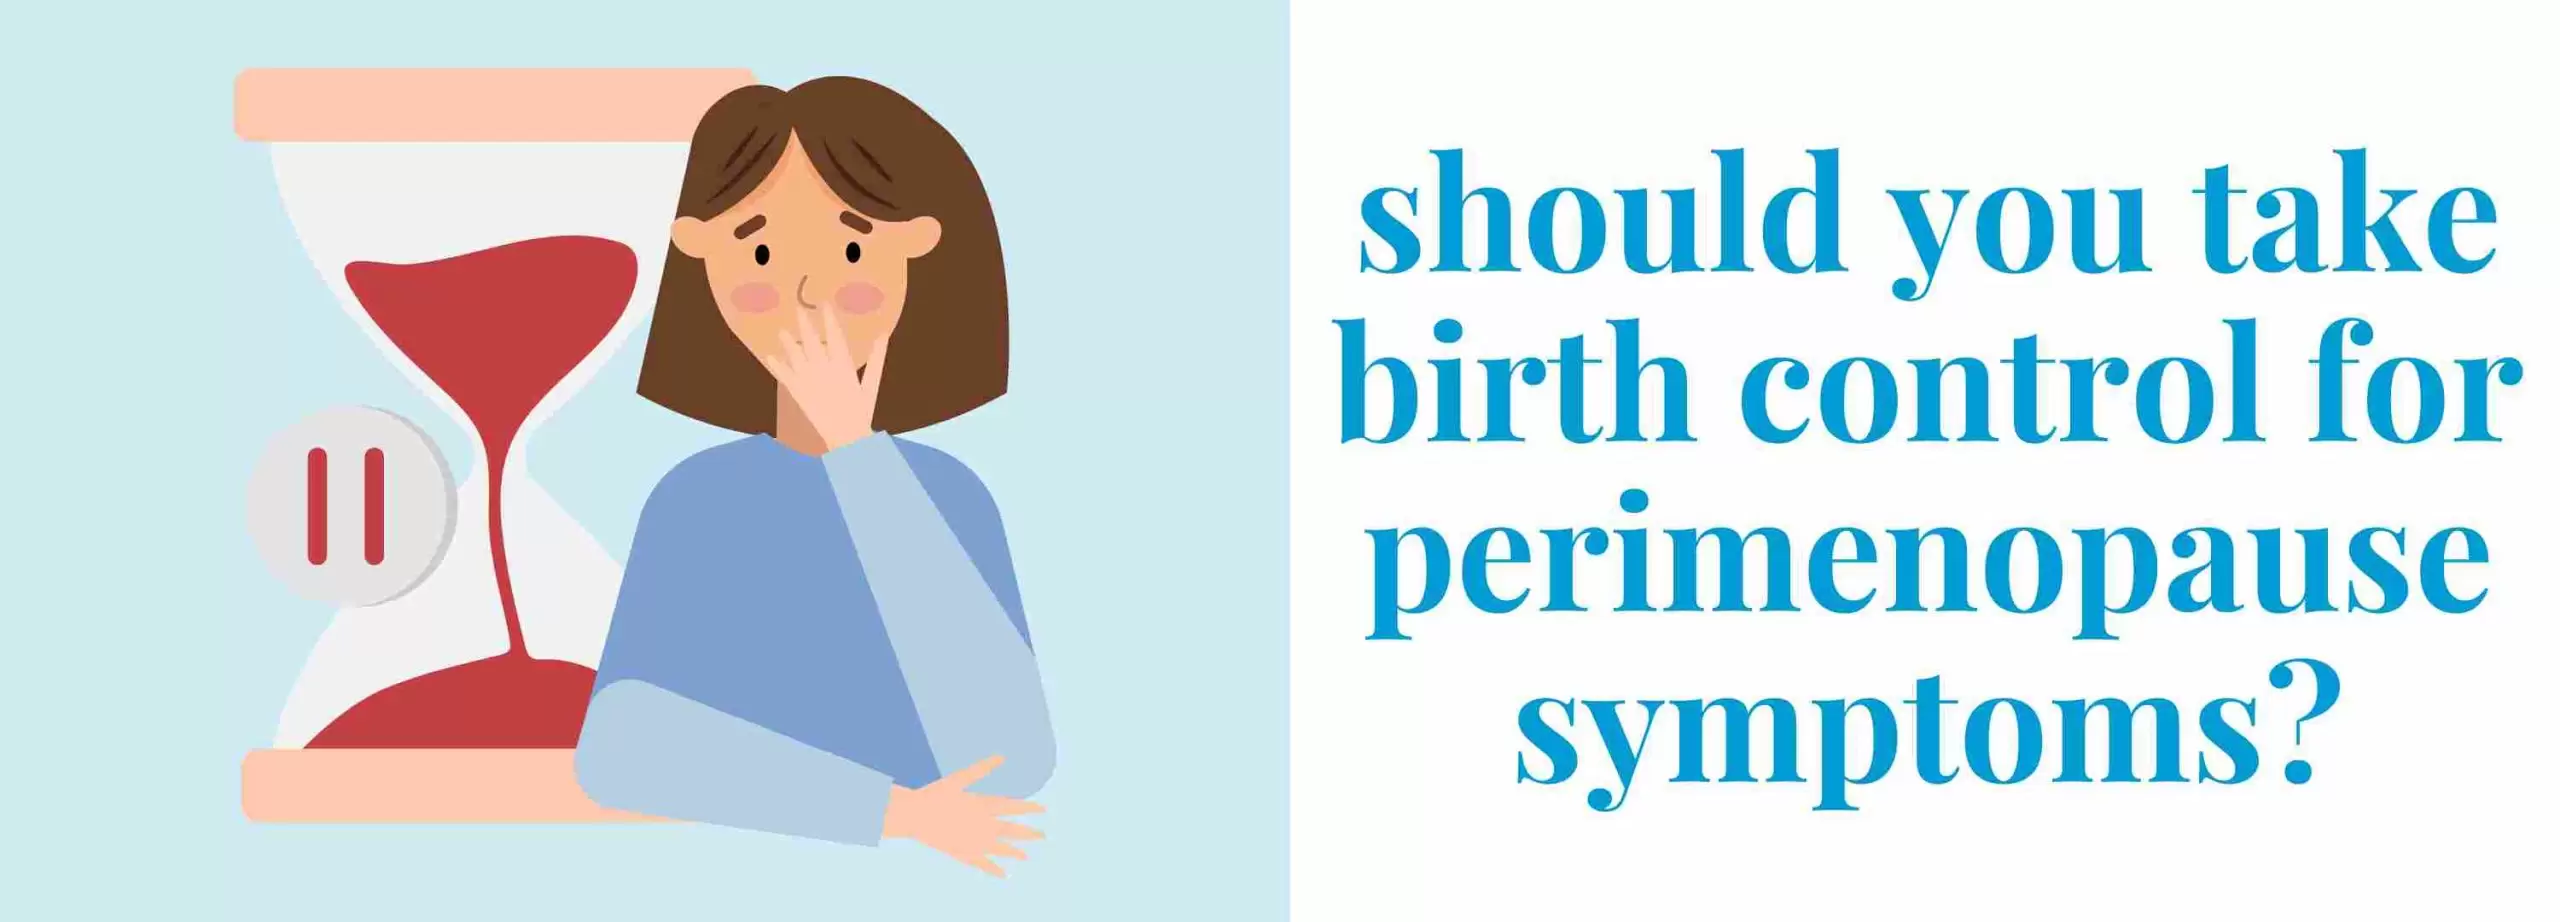 should you take birth control for peri menopause symptoms?